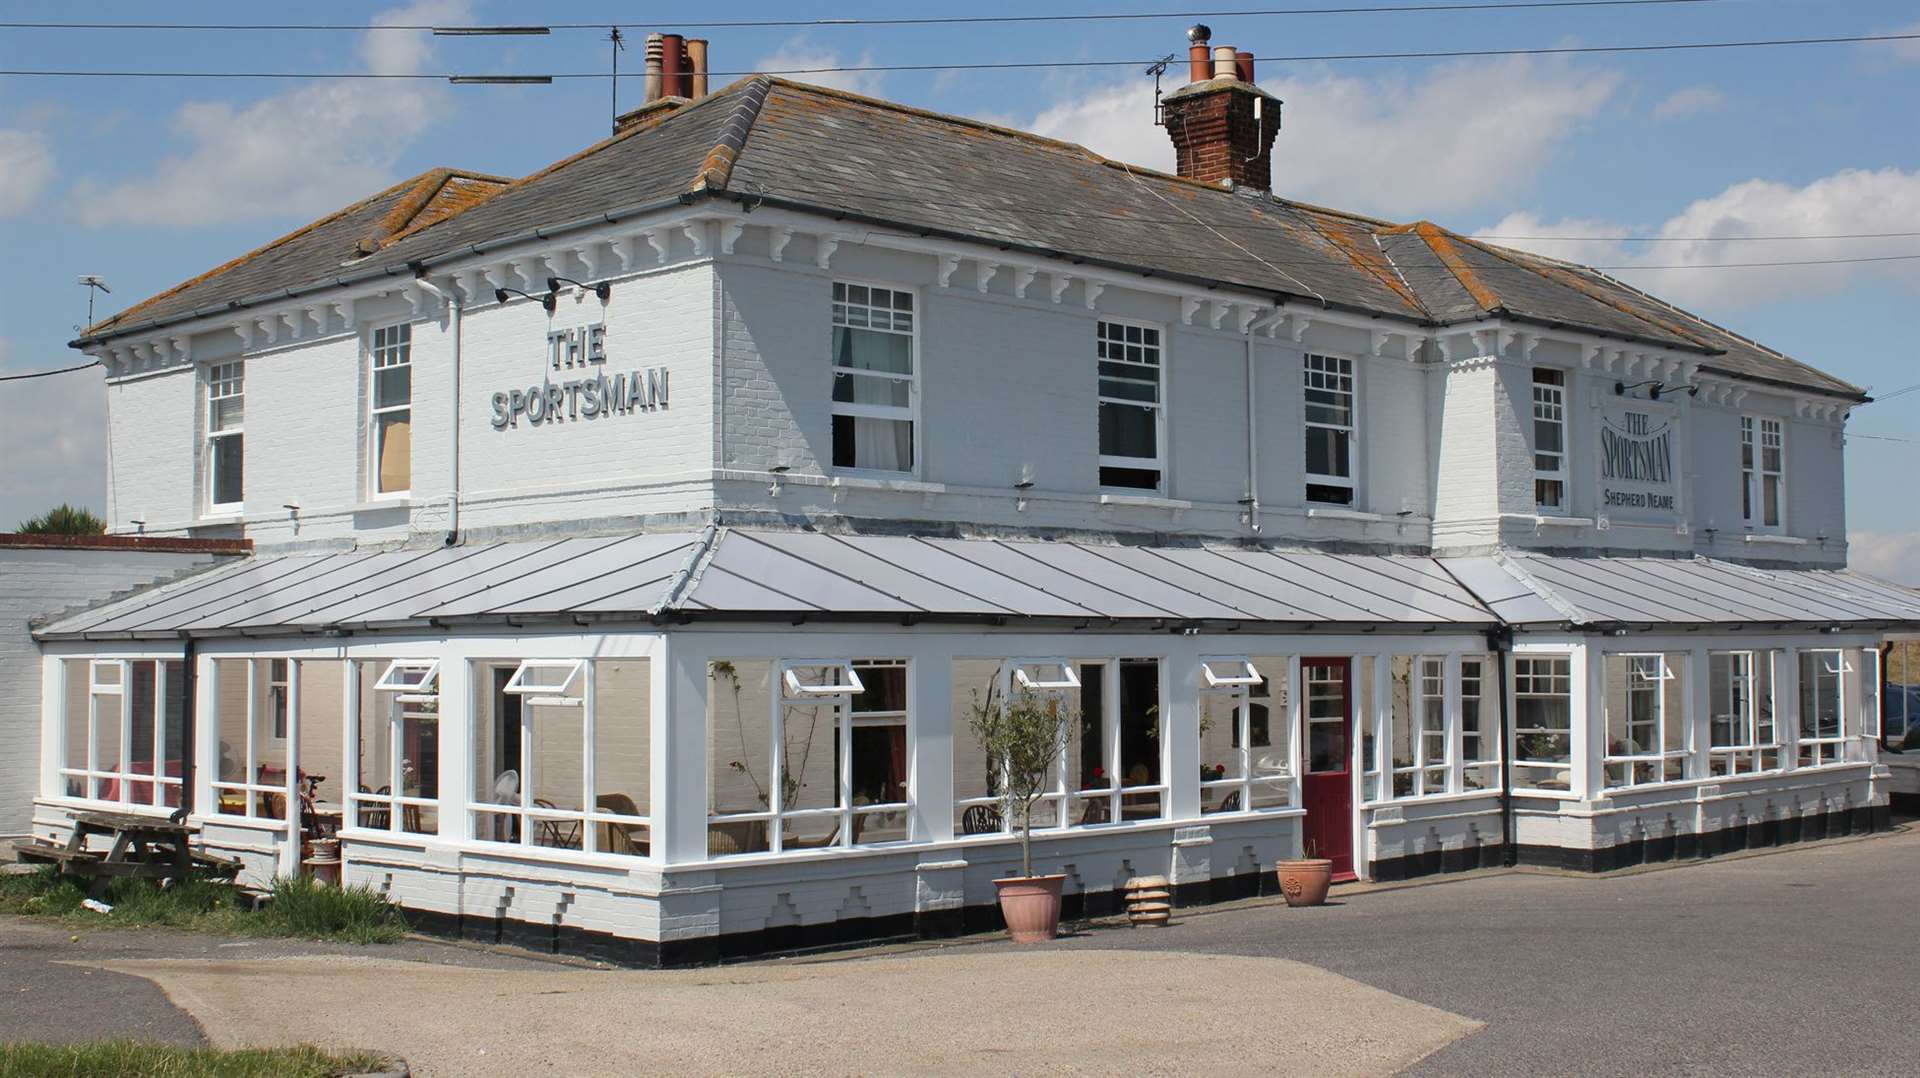 The award winning Sportsman pub at Seasalter